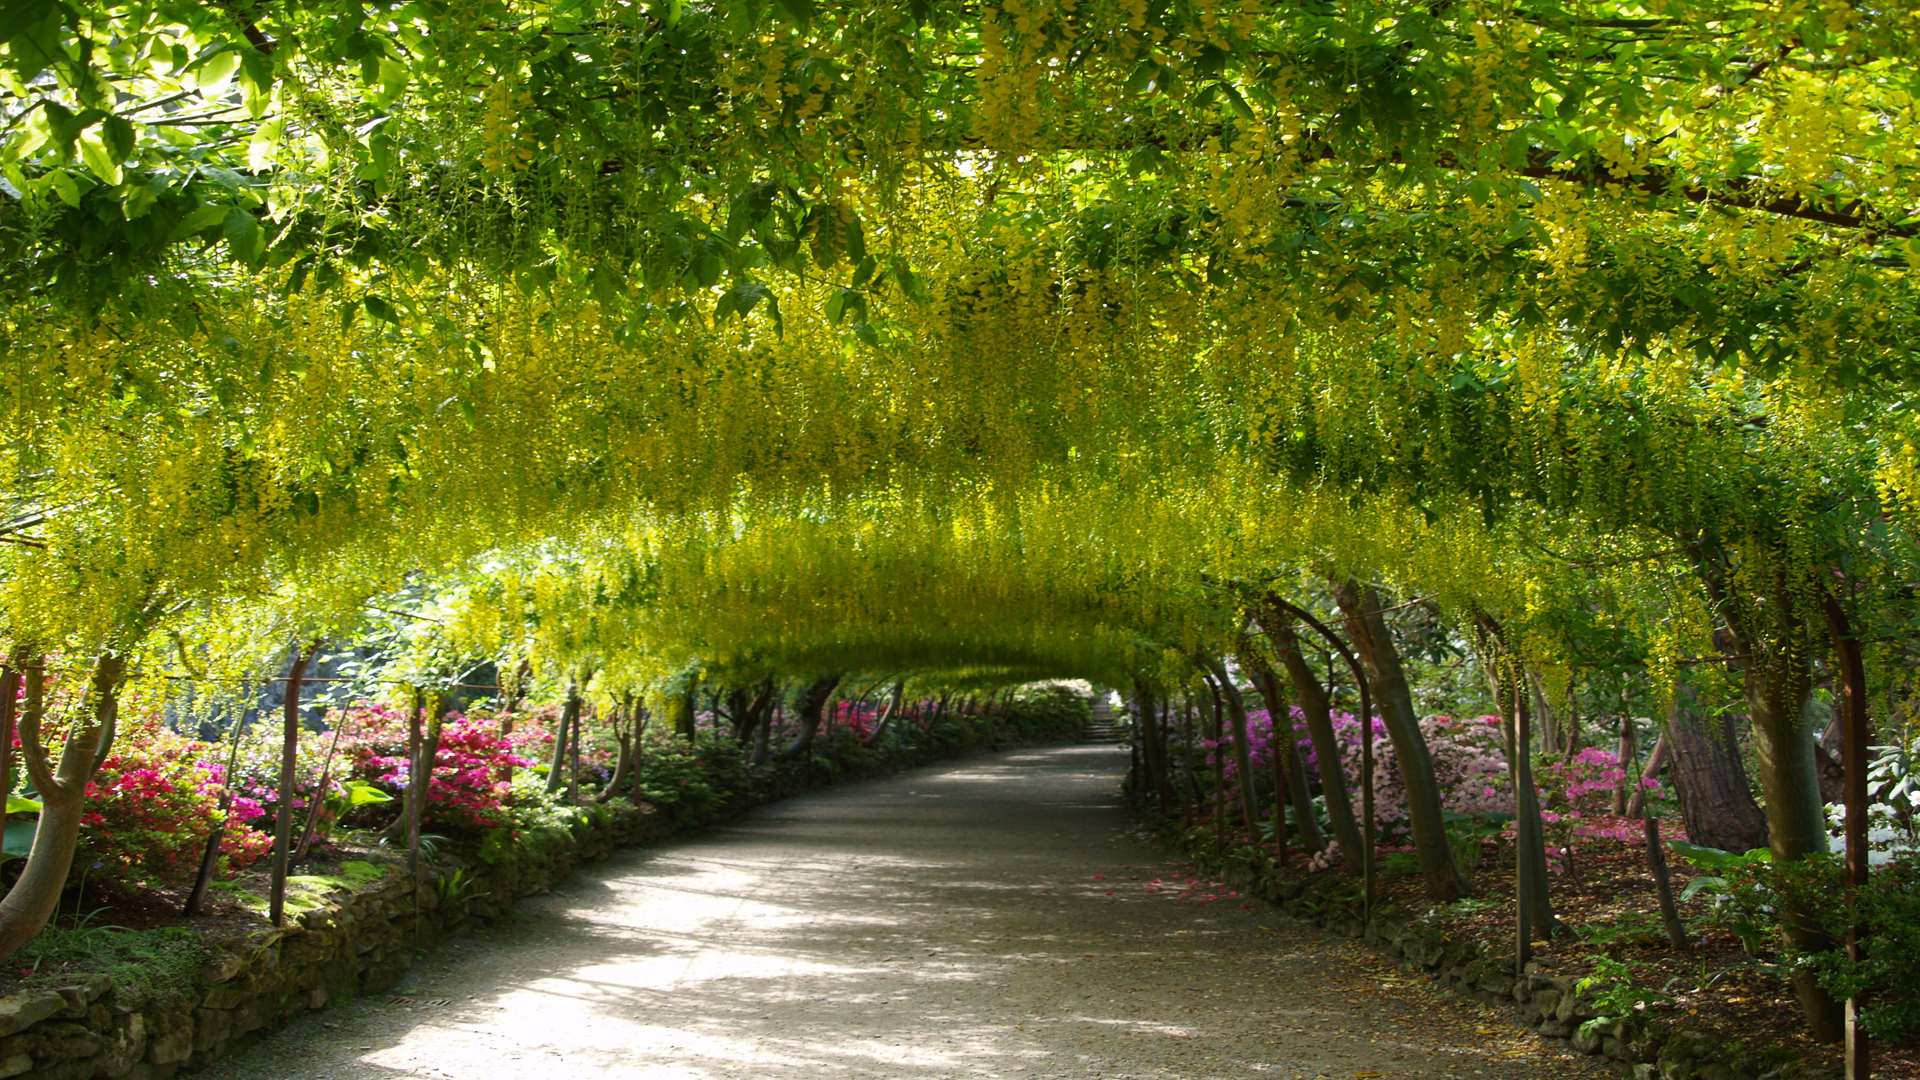 The much-visited Laburnum Arch in bloom at Bodnant Gardens near Llandudno